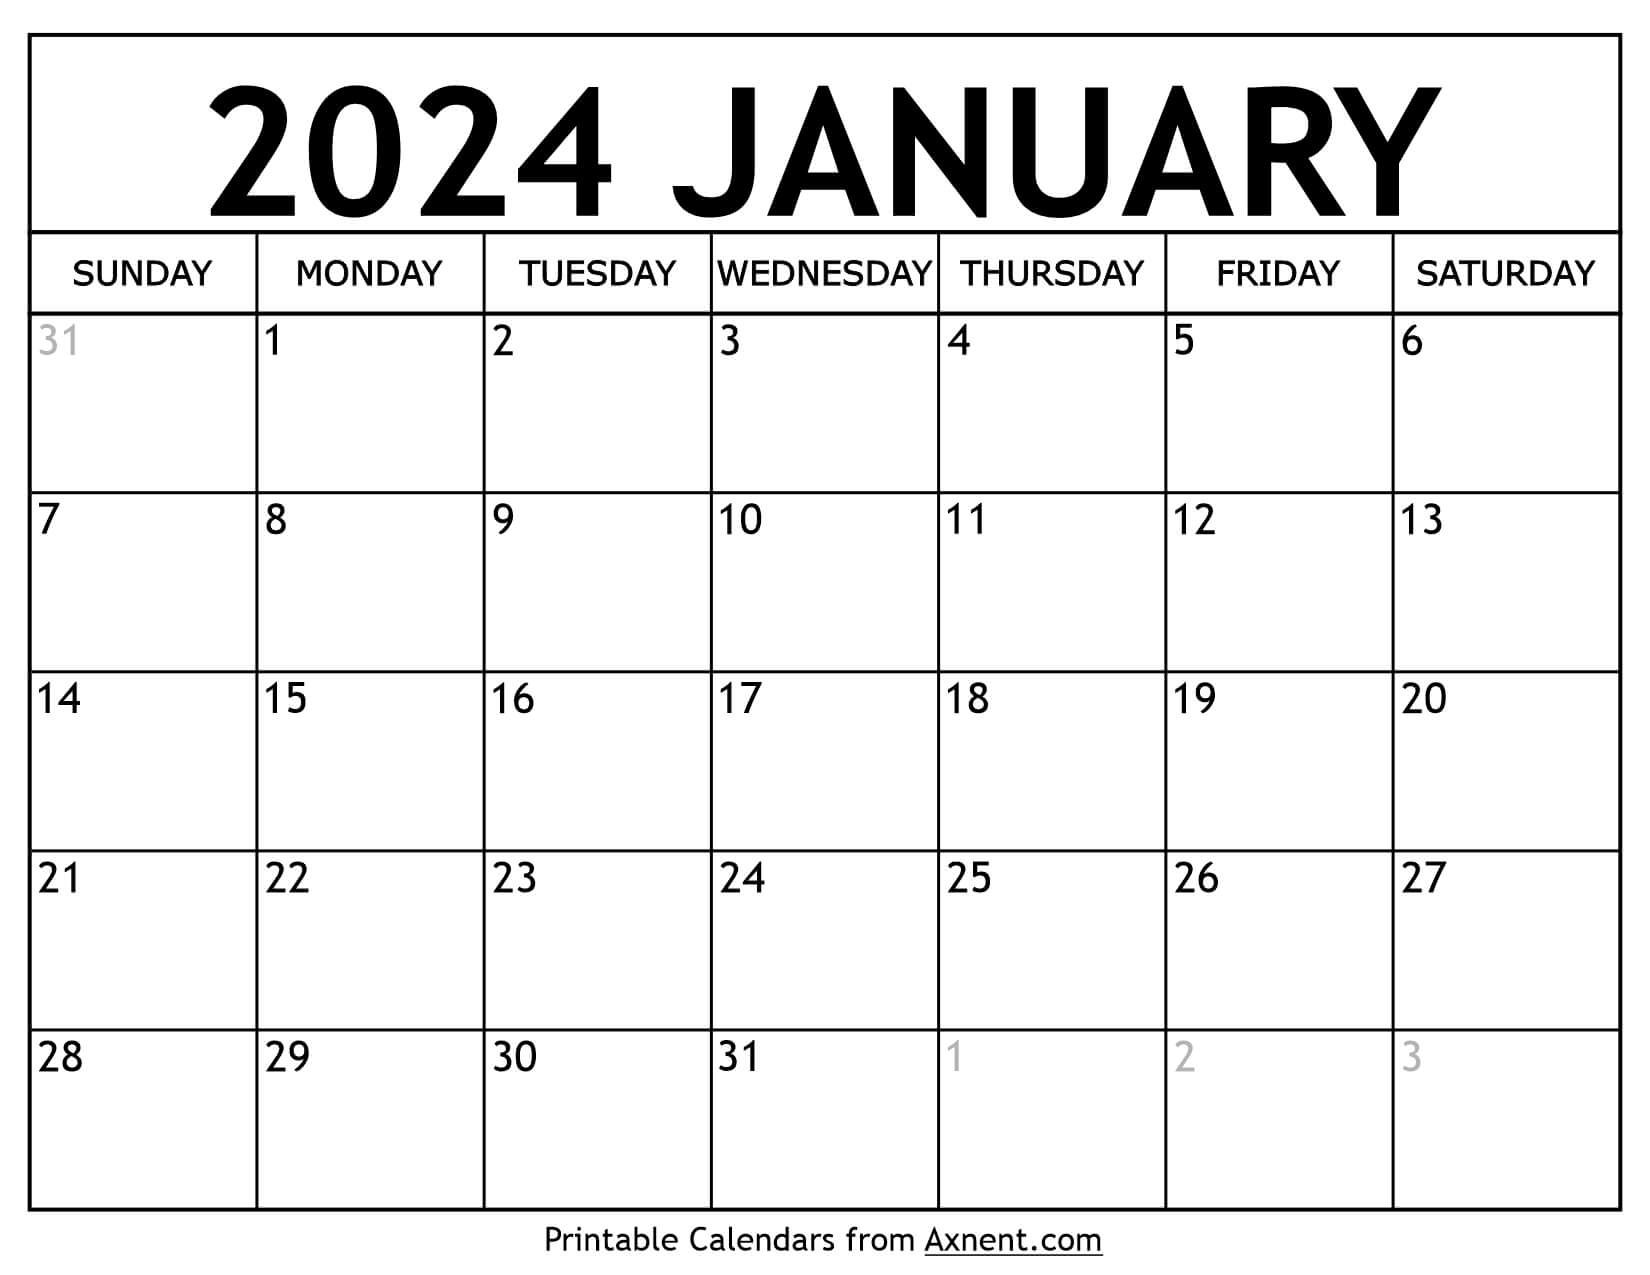 Printable January 2024 Calendar Template - Print Now for Free Printable January Calendar 2024